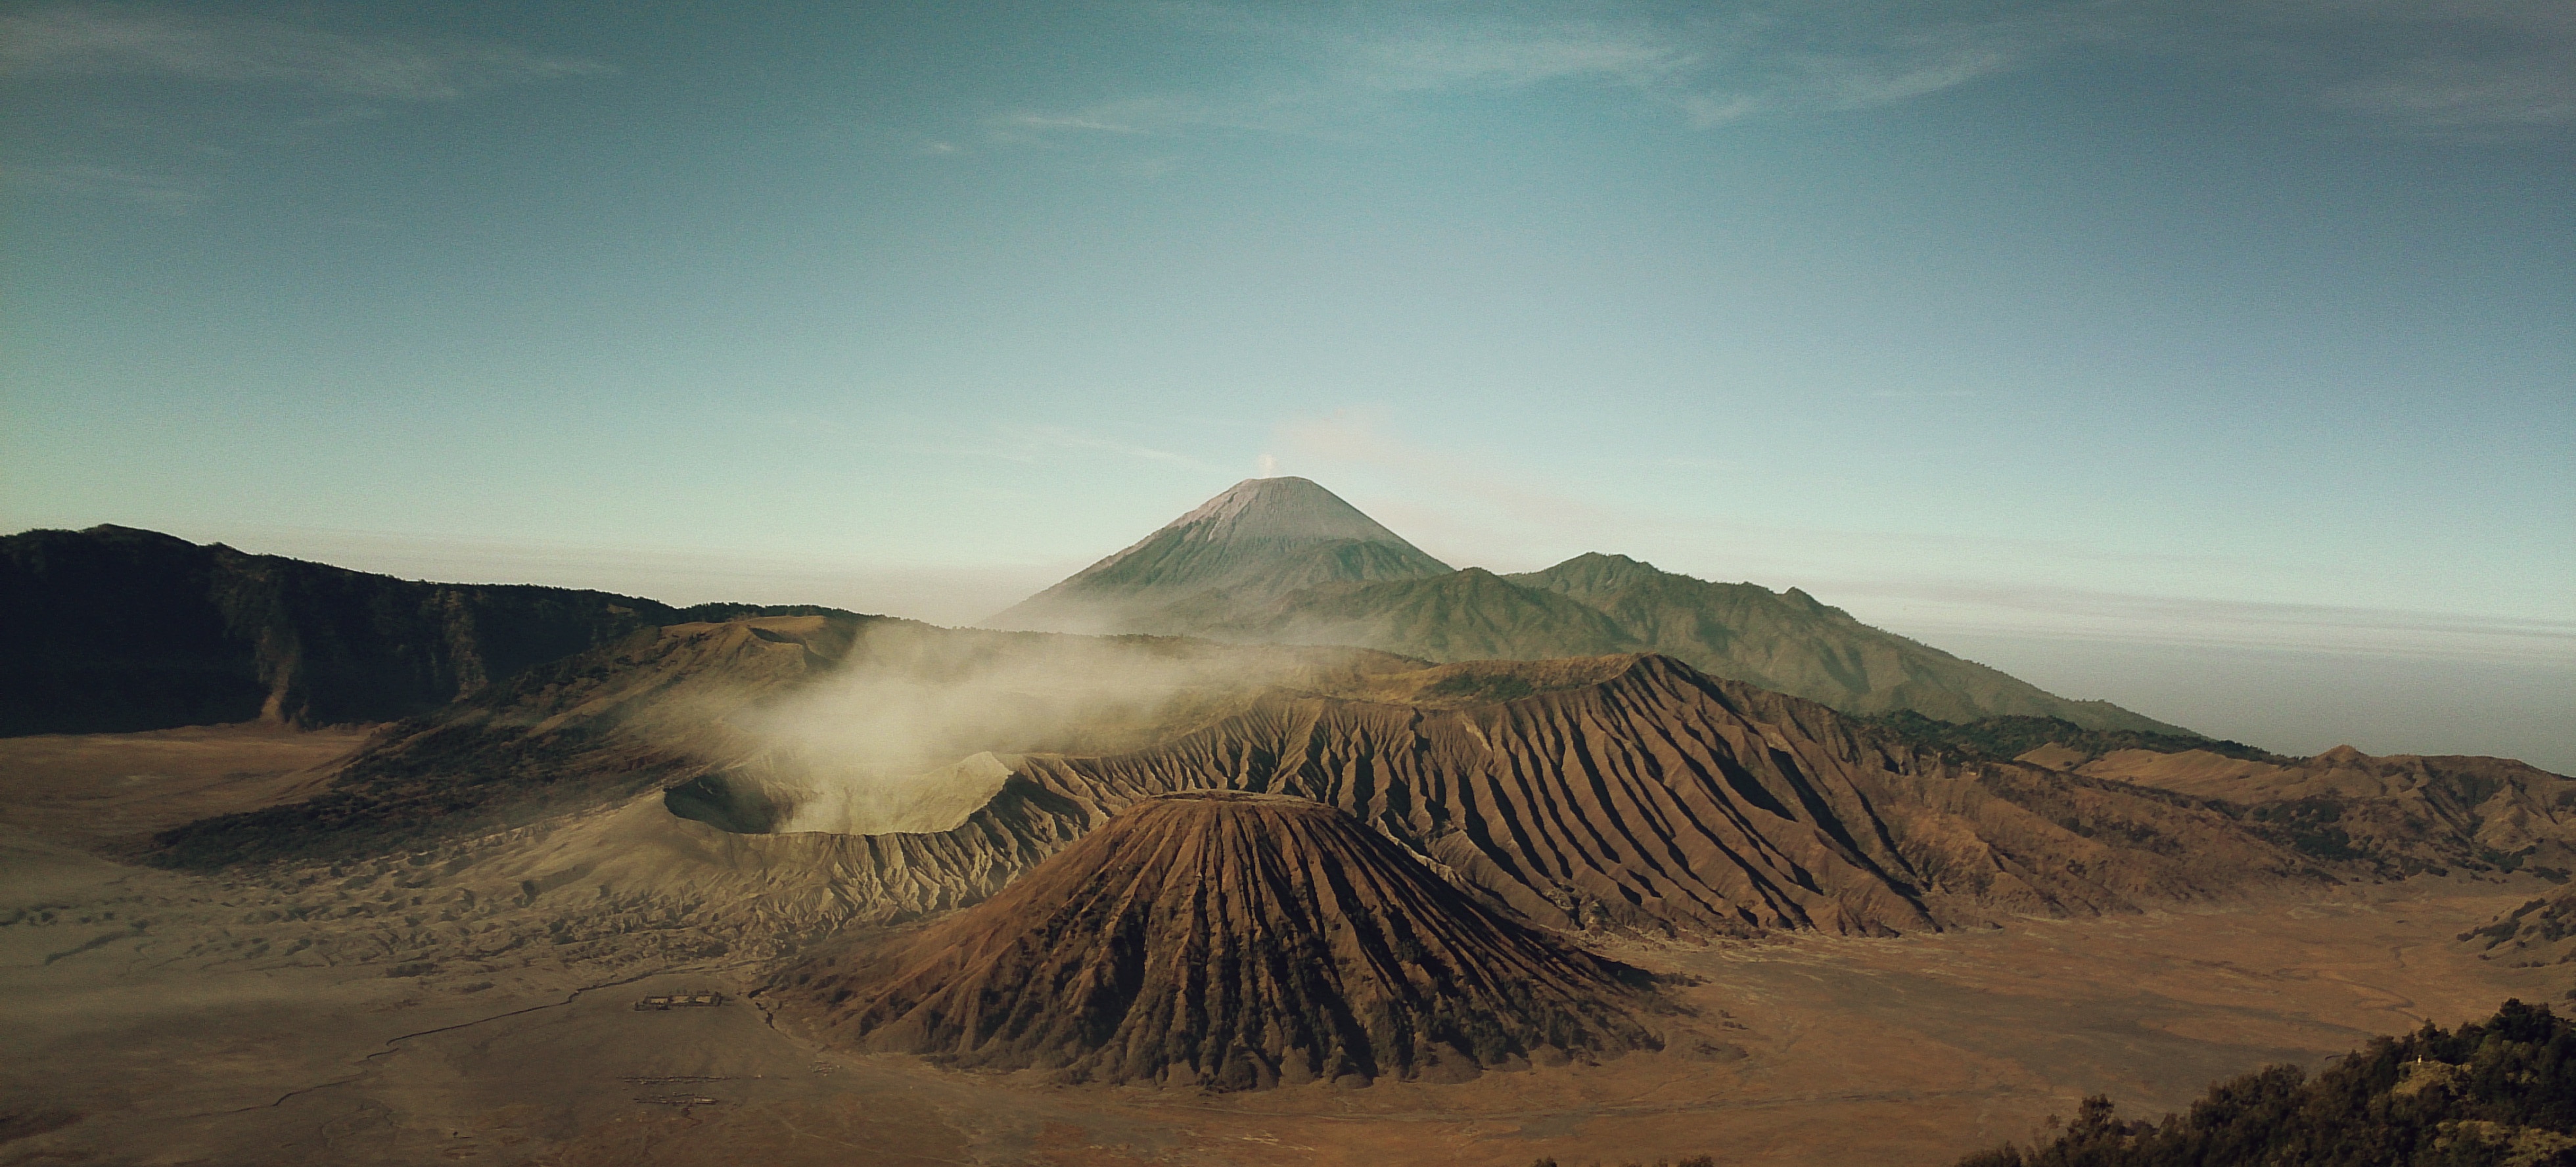 374060 Hintergrundbild herunterladen erde/natur, berg bromo, indonesien, gebirge, vulkan, vulkane - Bildschirmschoner und Bilder kostenlos